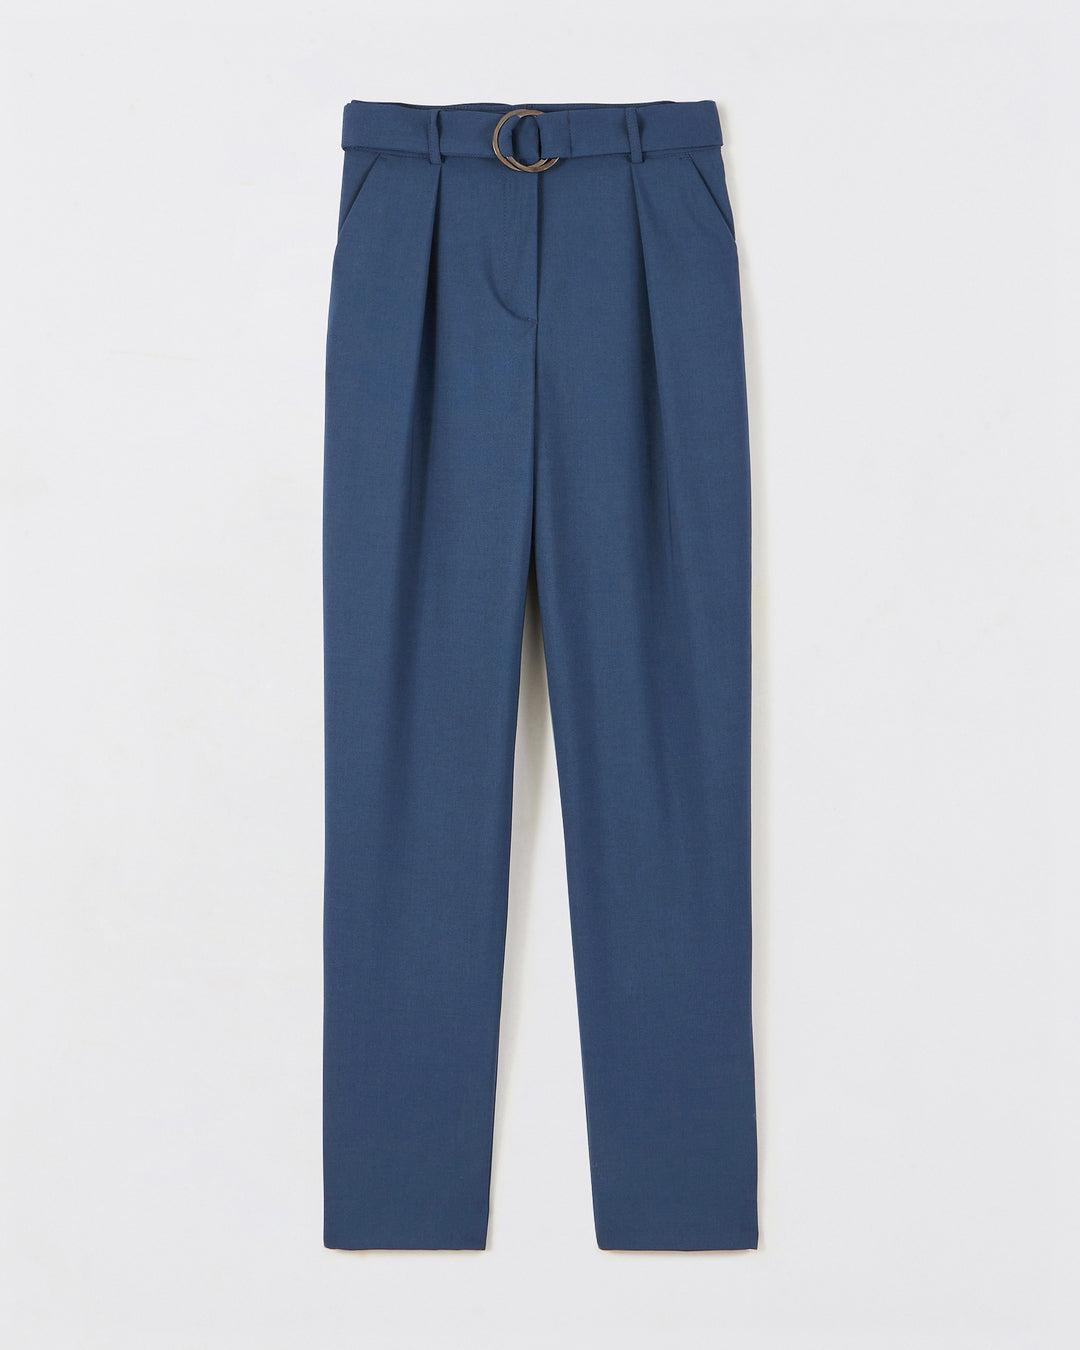 Tailored trousers-blue-grey-Cut-7-8th-waist-high-Ply-under-belt-Two-pockets-Italian-belt-assorted-tone-on-tone-17H10-tailored-trousers-for-women-paris-